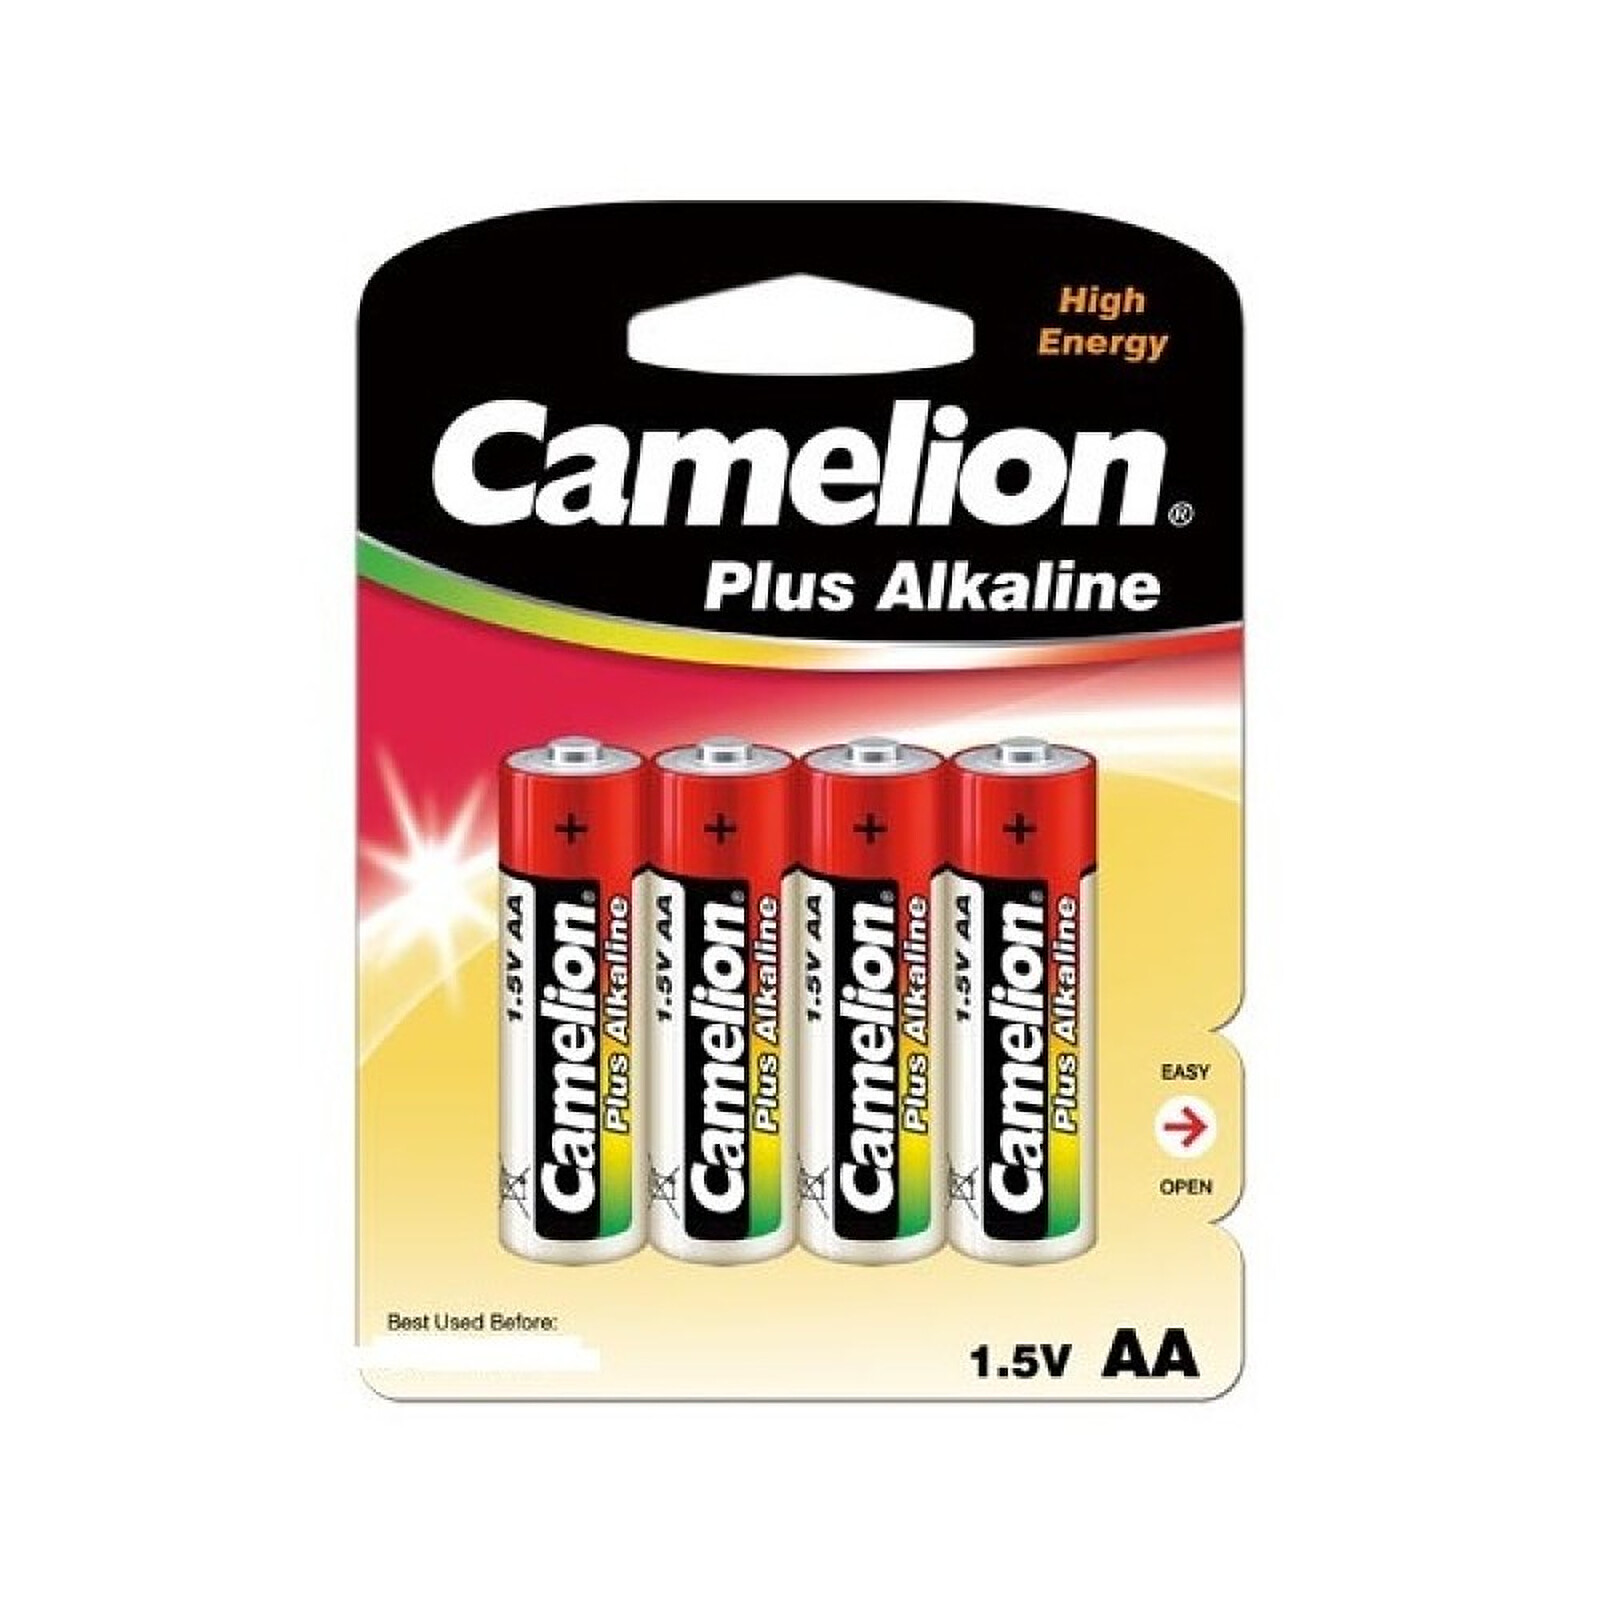 Батареи элементы питания. Camelion lr20-bp2. Camelion батарейка lr20-bp2. Camelion lr20 Plus Alkaline BL-2 (D) батарейка,1.5в 2 шт. Camelion LR 20- 2 BL Plus Alkaline.